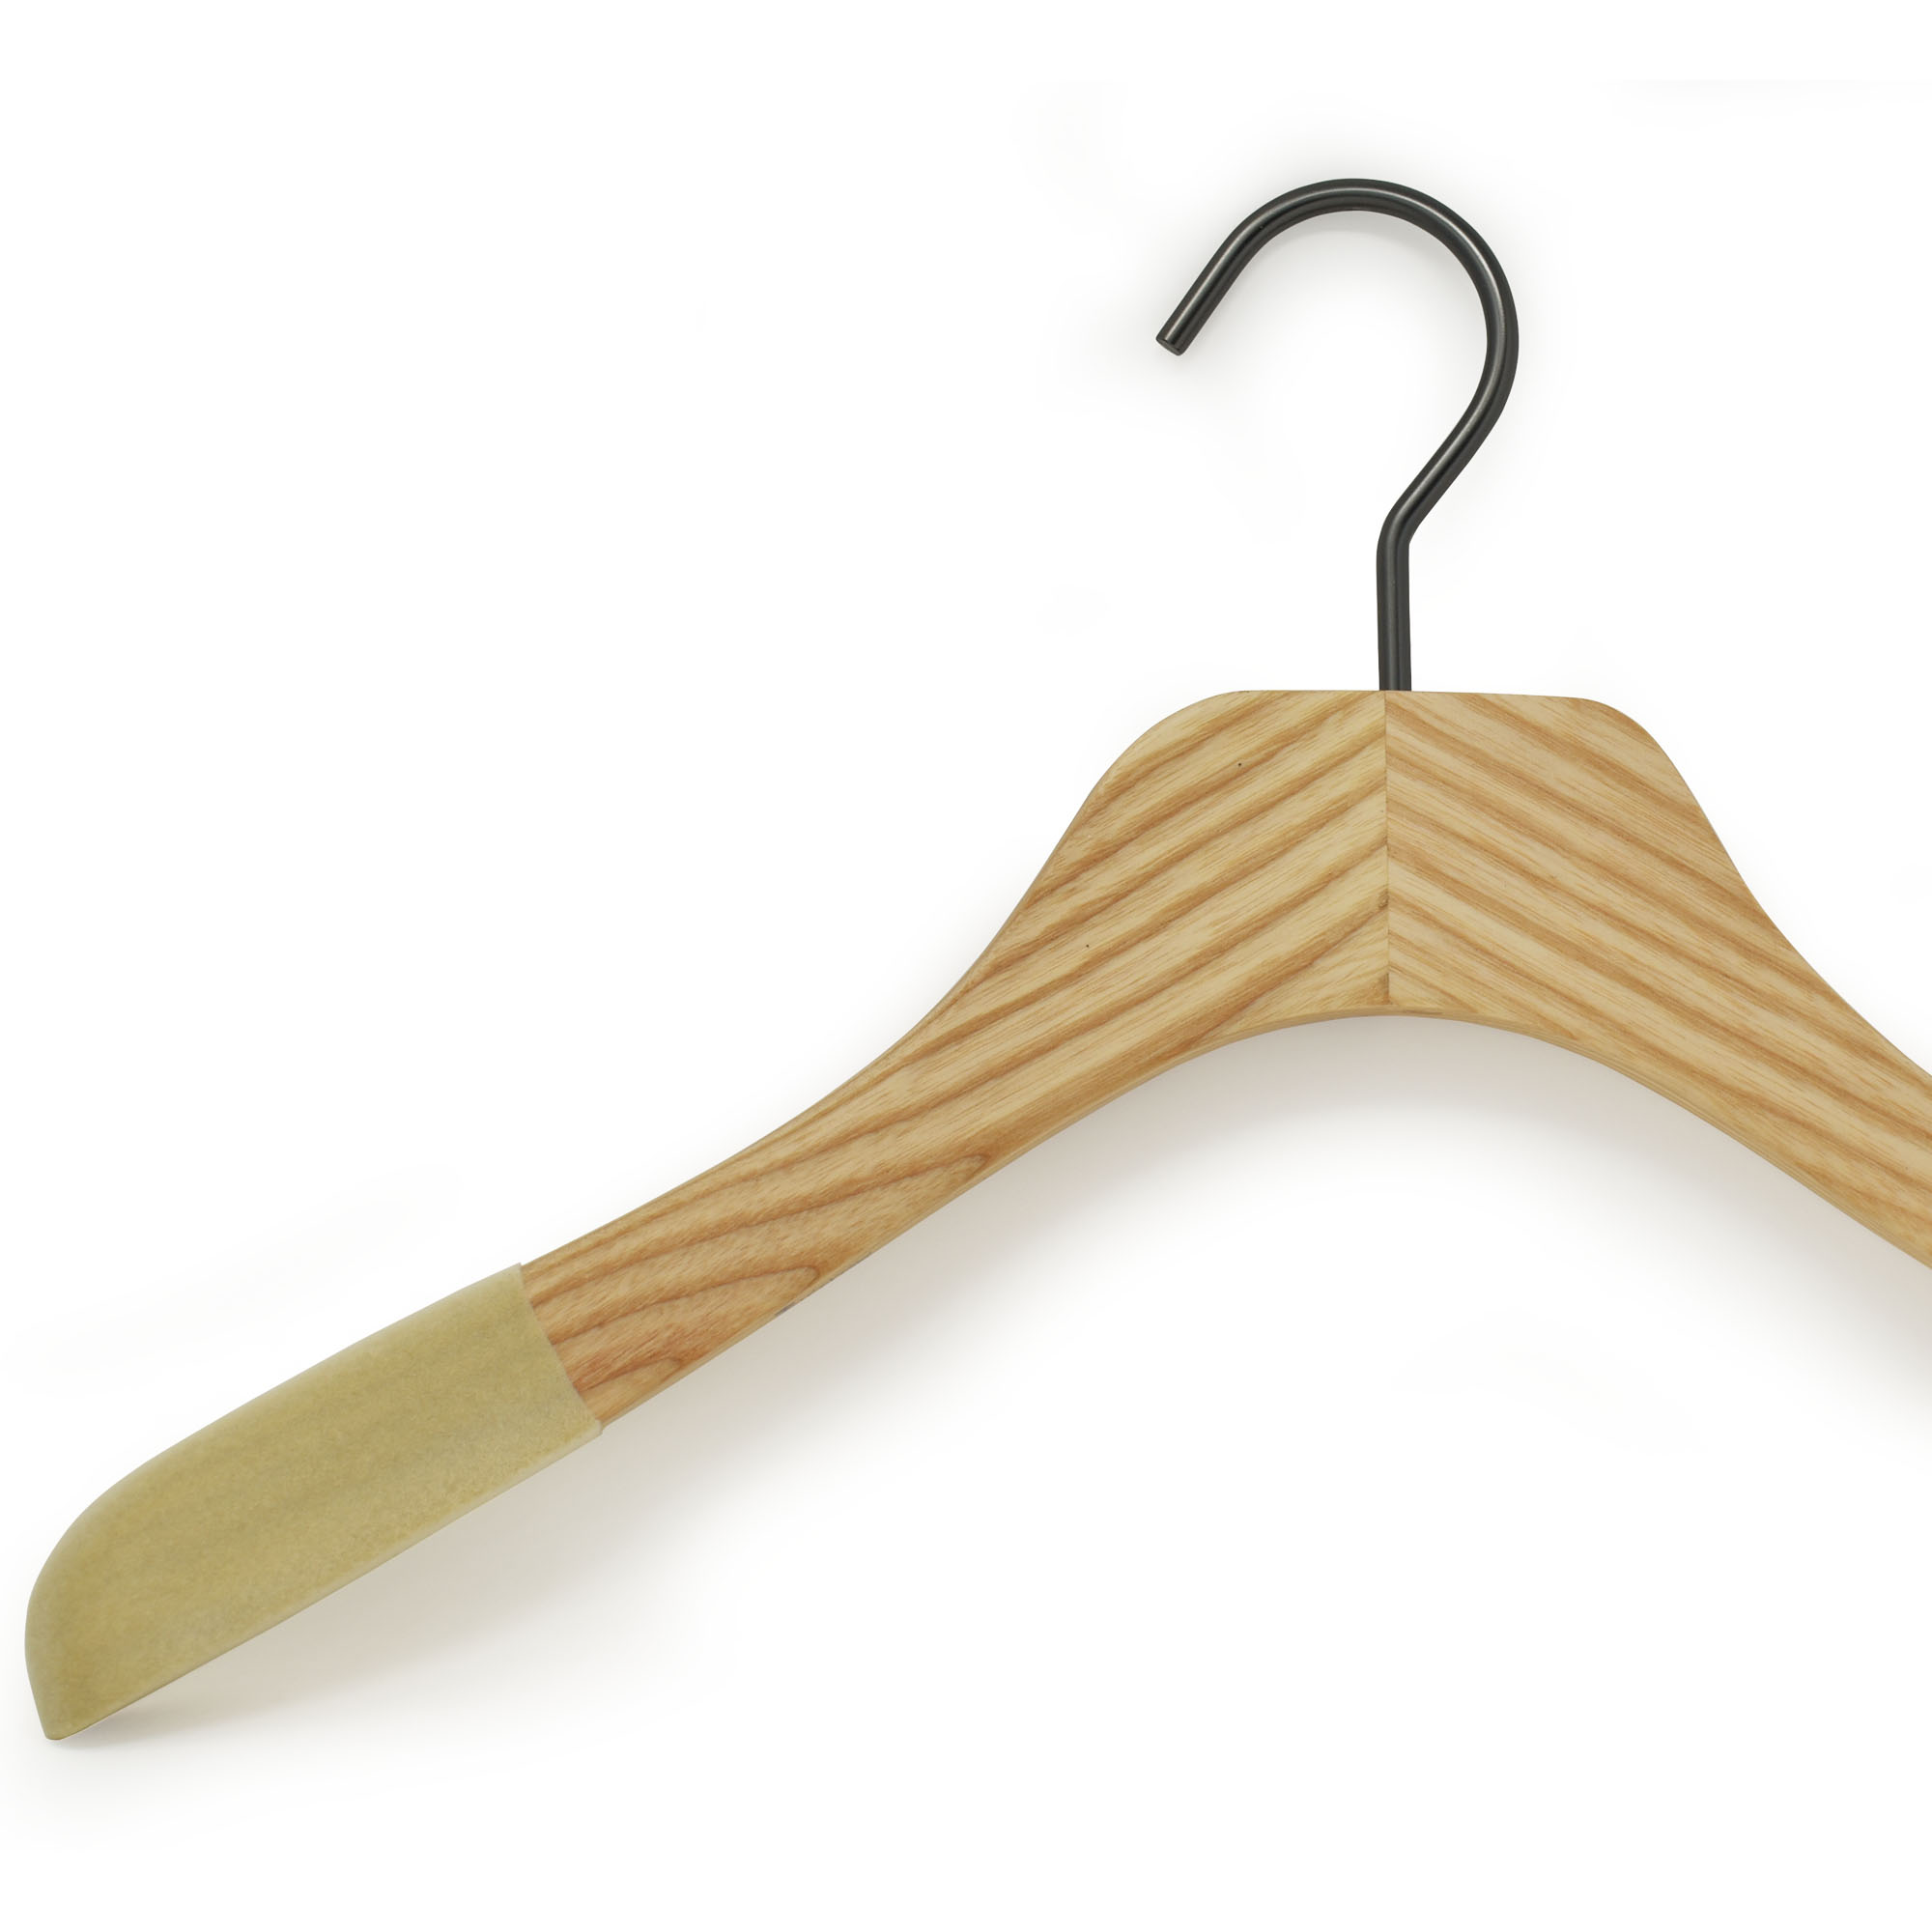 Wooden hangers for blouses and tops with non-slip velvet